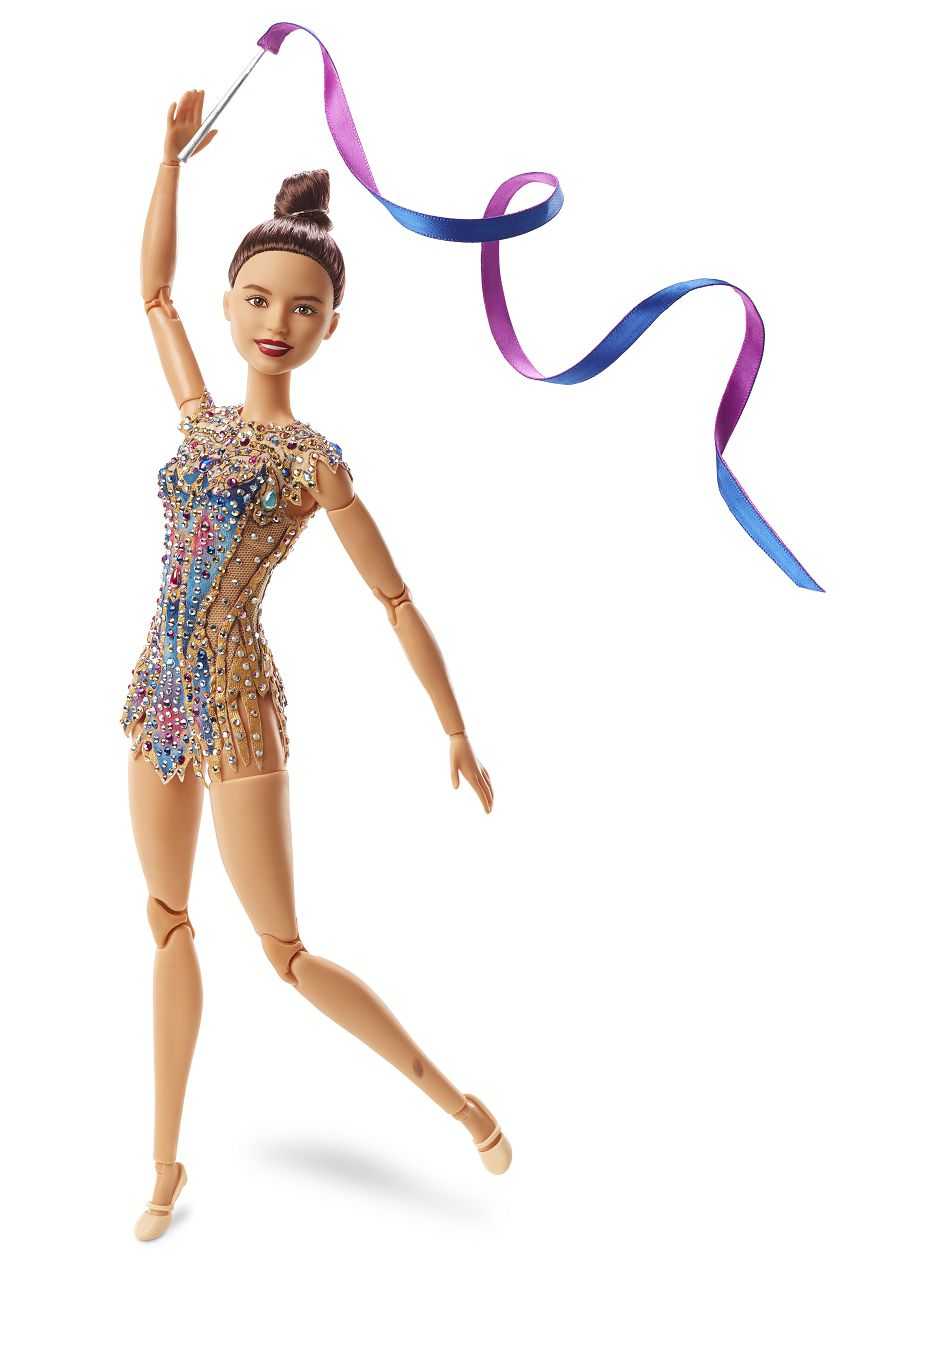 Gymnast Milena Baldassarri as the new Barbie Role Model